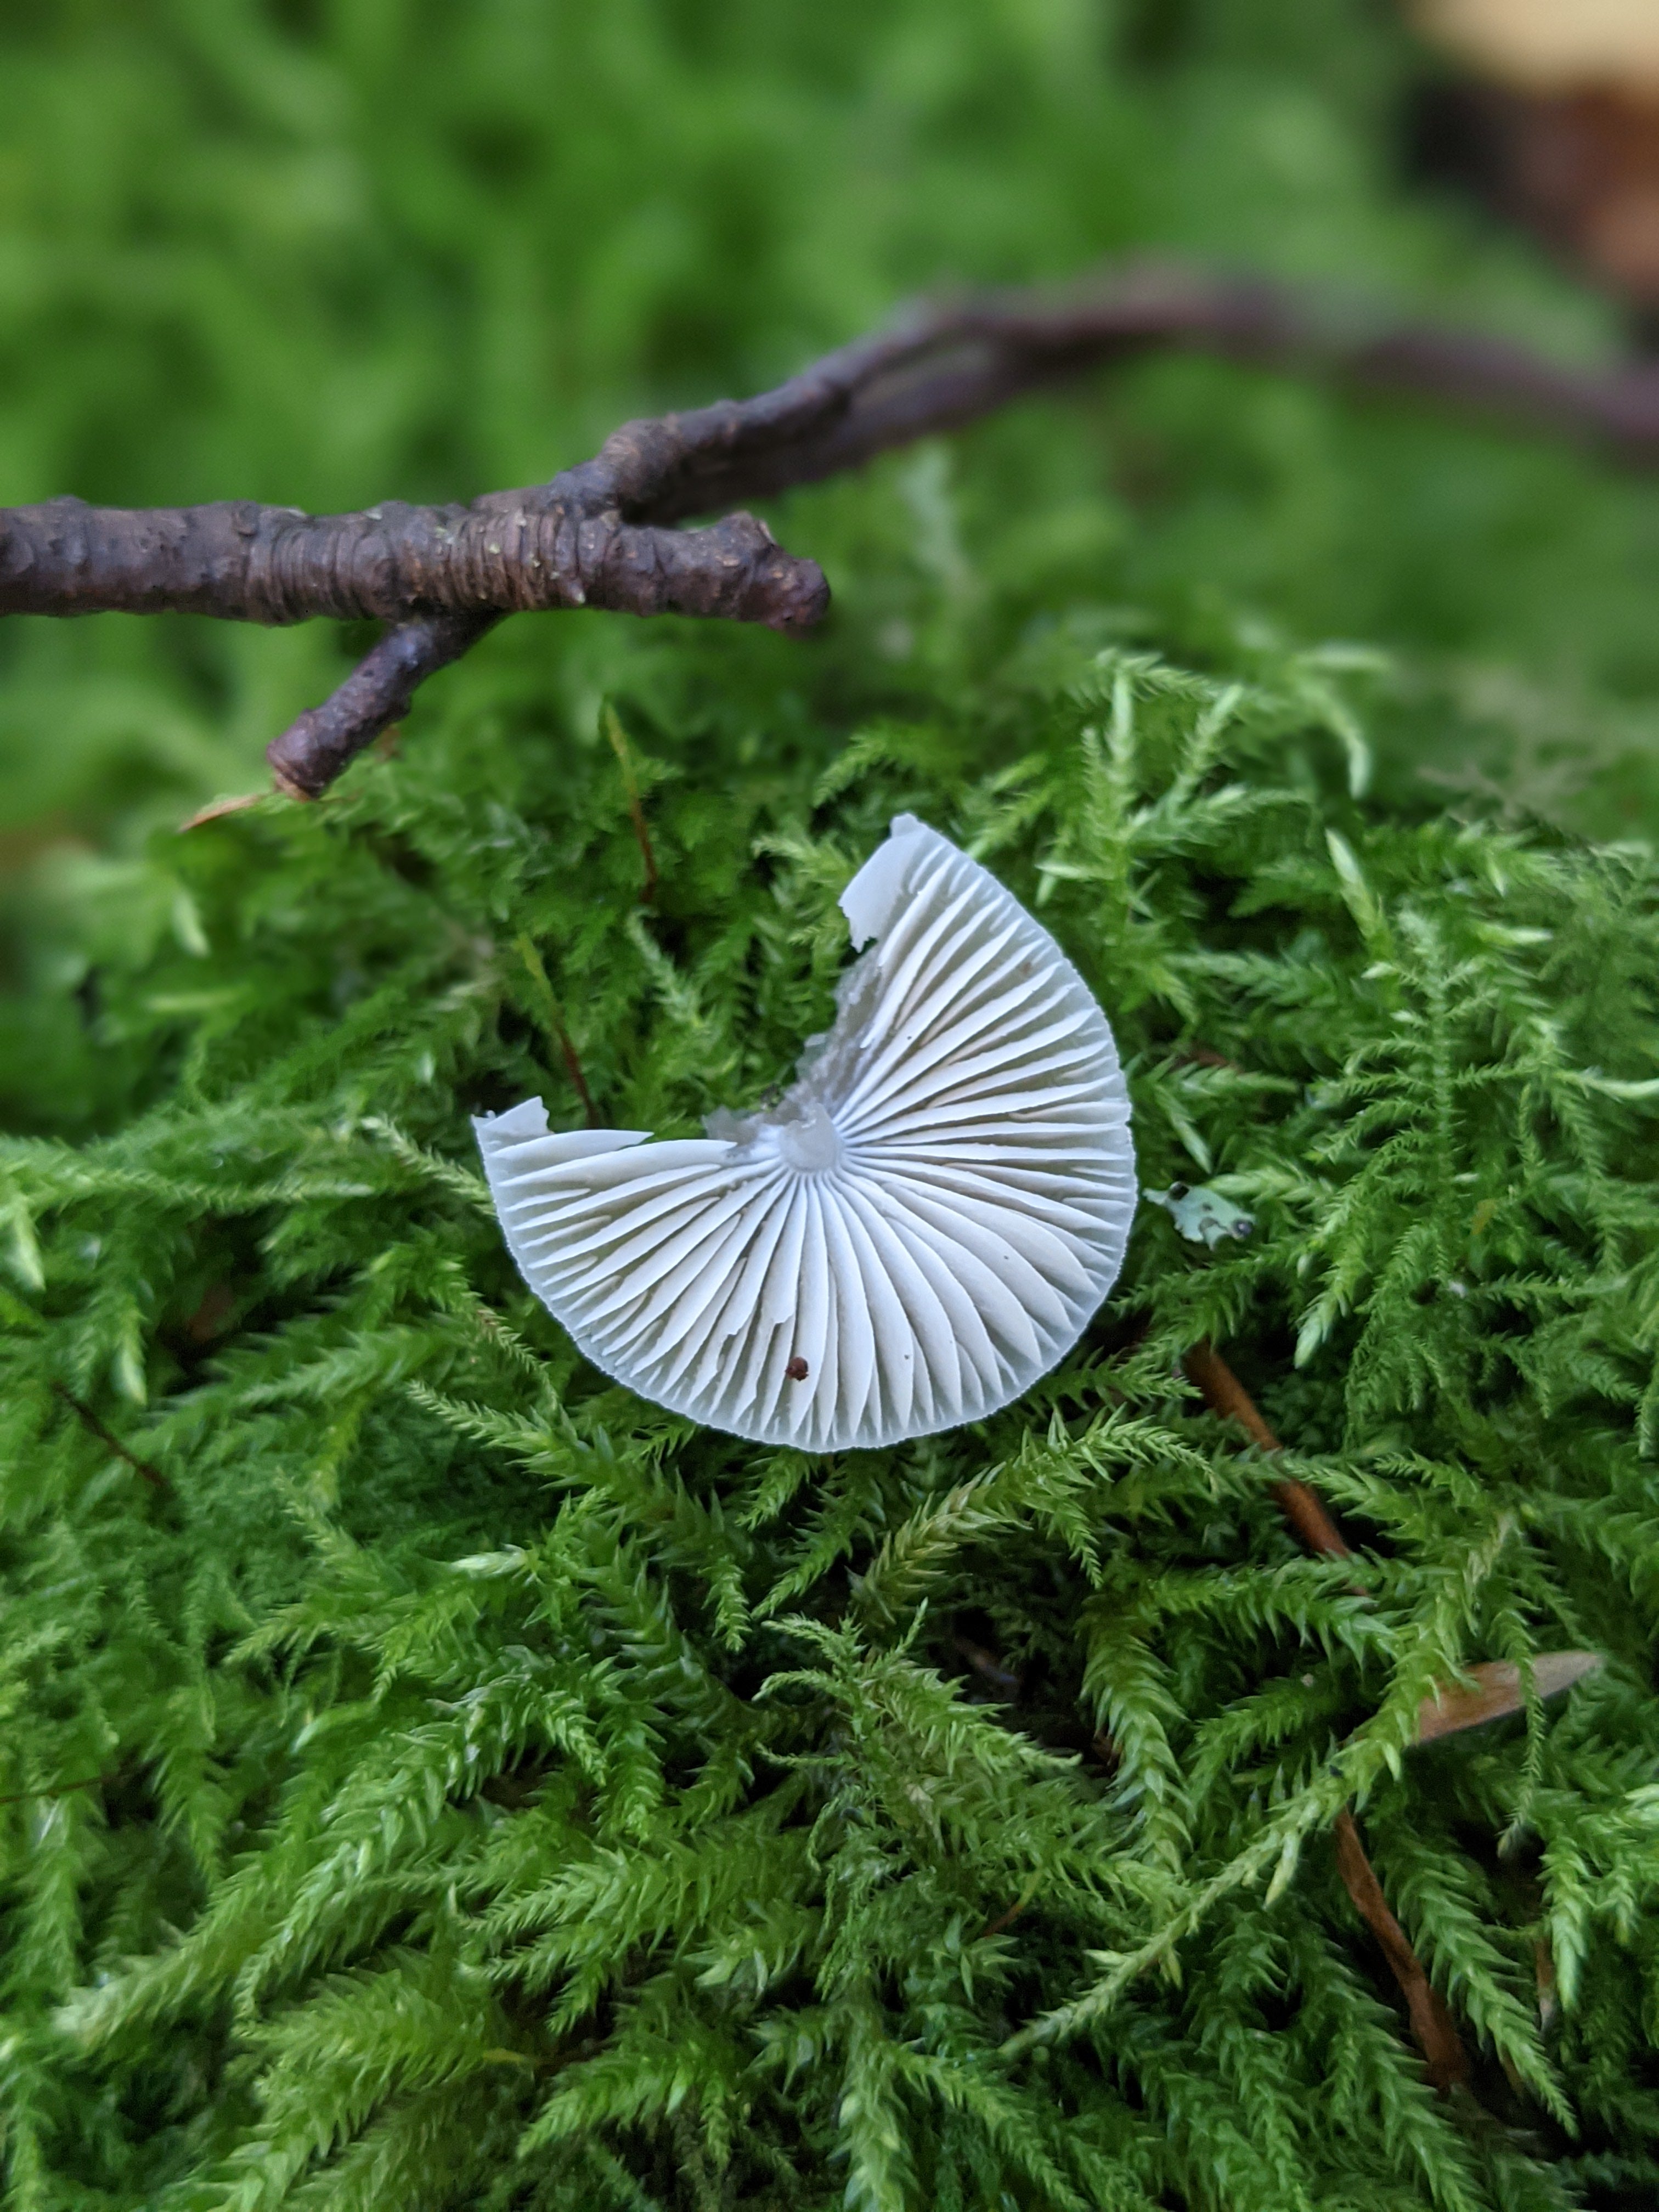 fungi gills on the moss